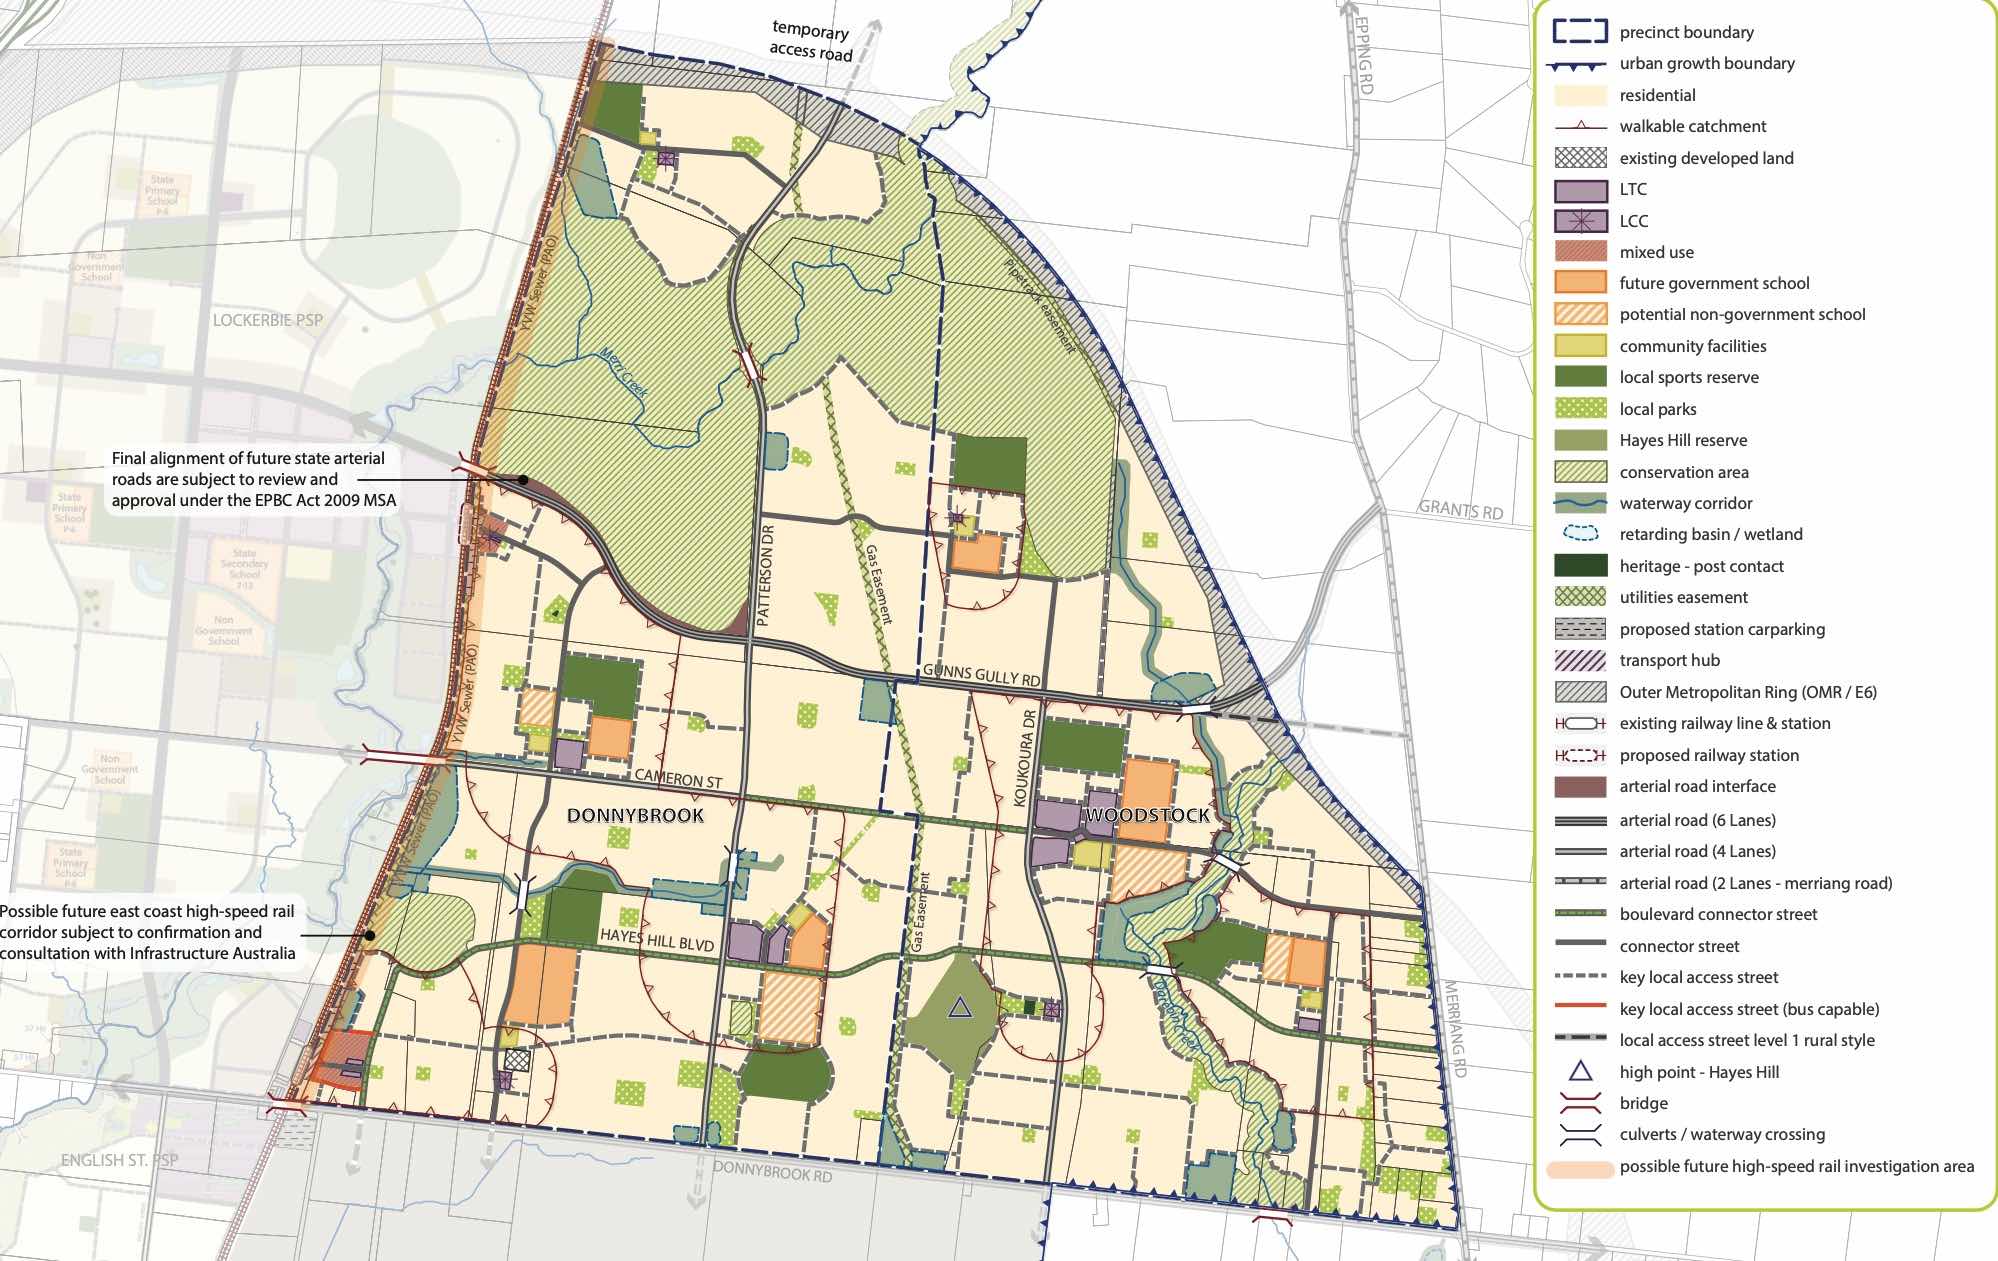 Donnybrook-Woodstock Precinct Structure Plan – Future Urban Structure